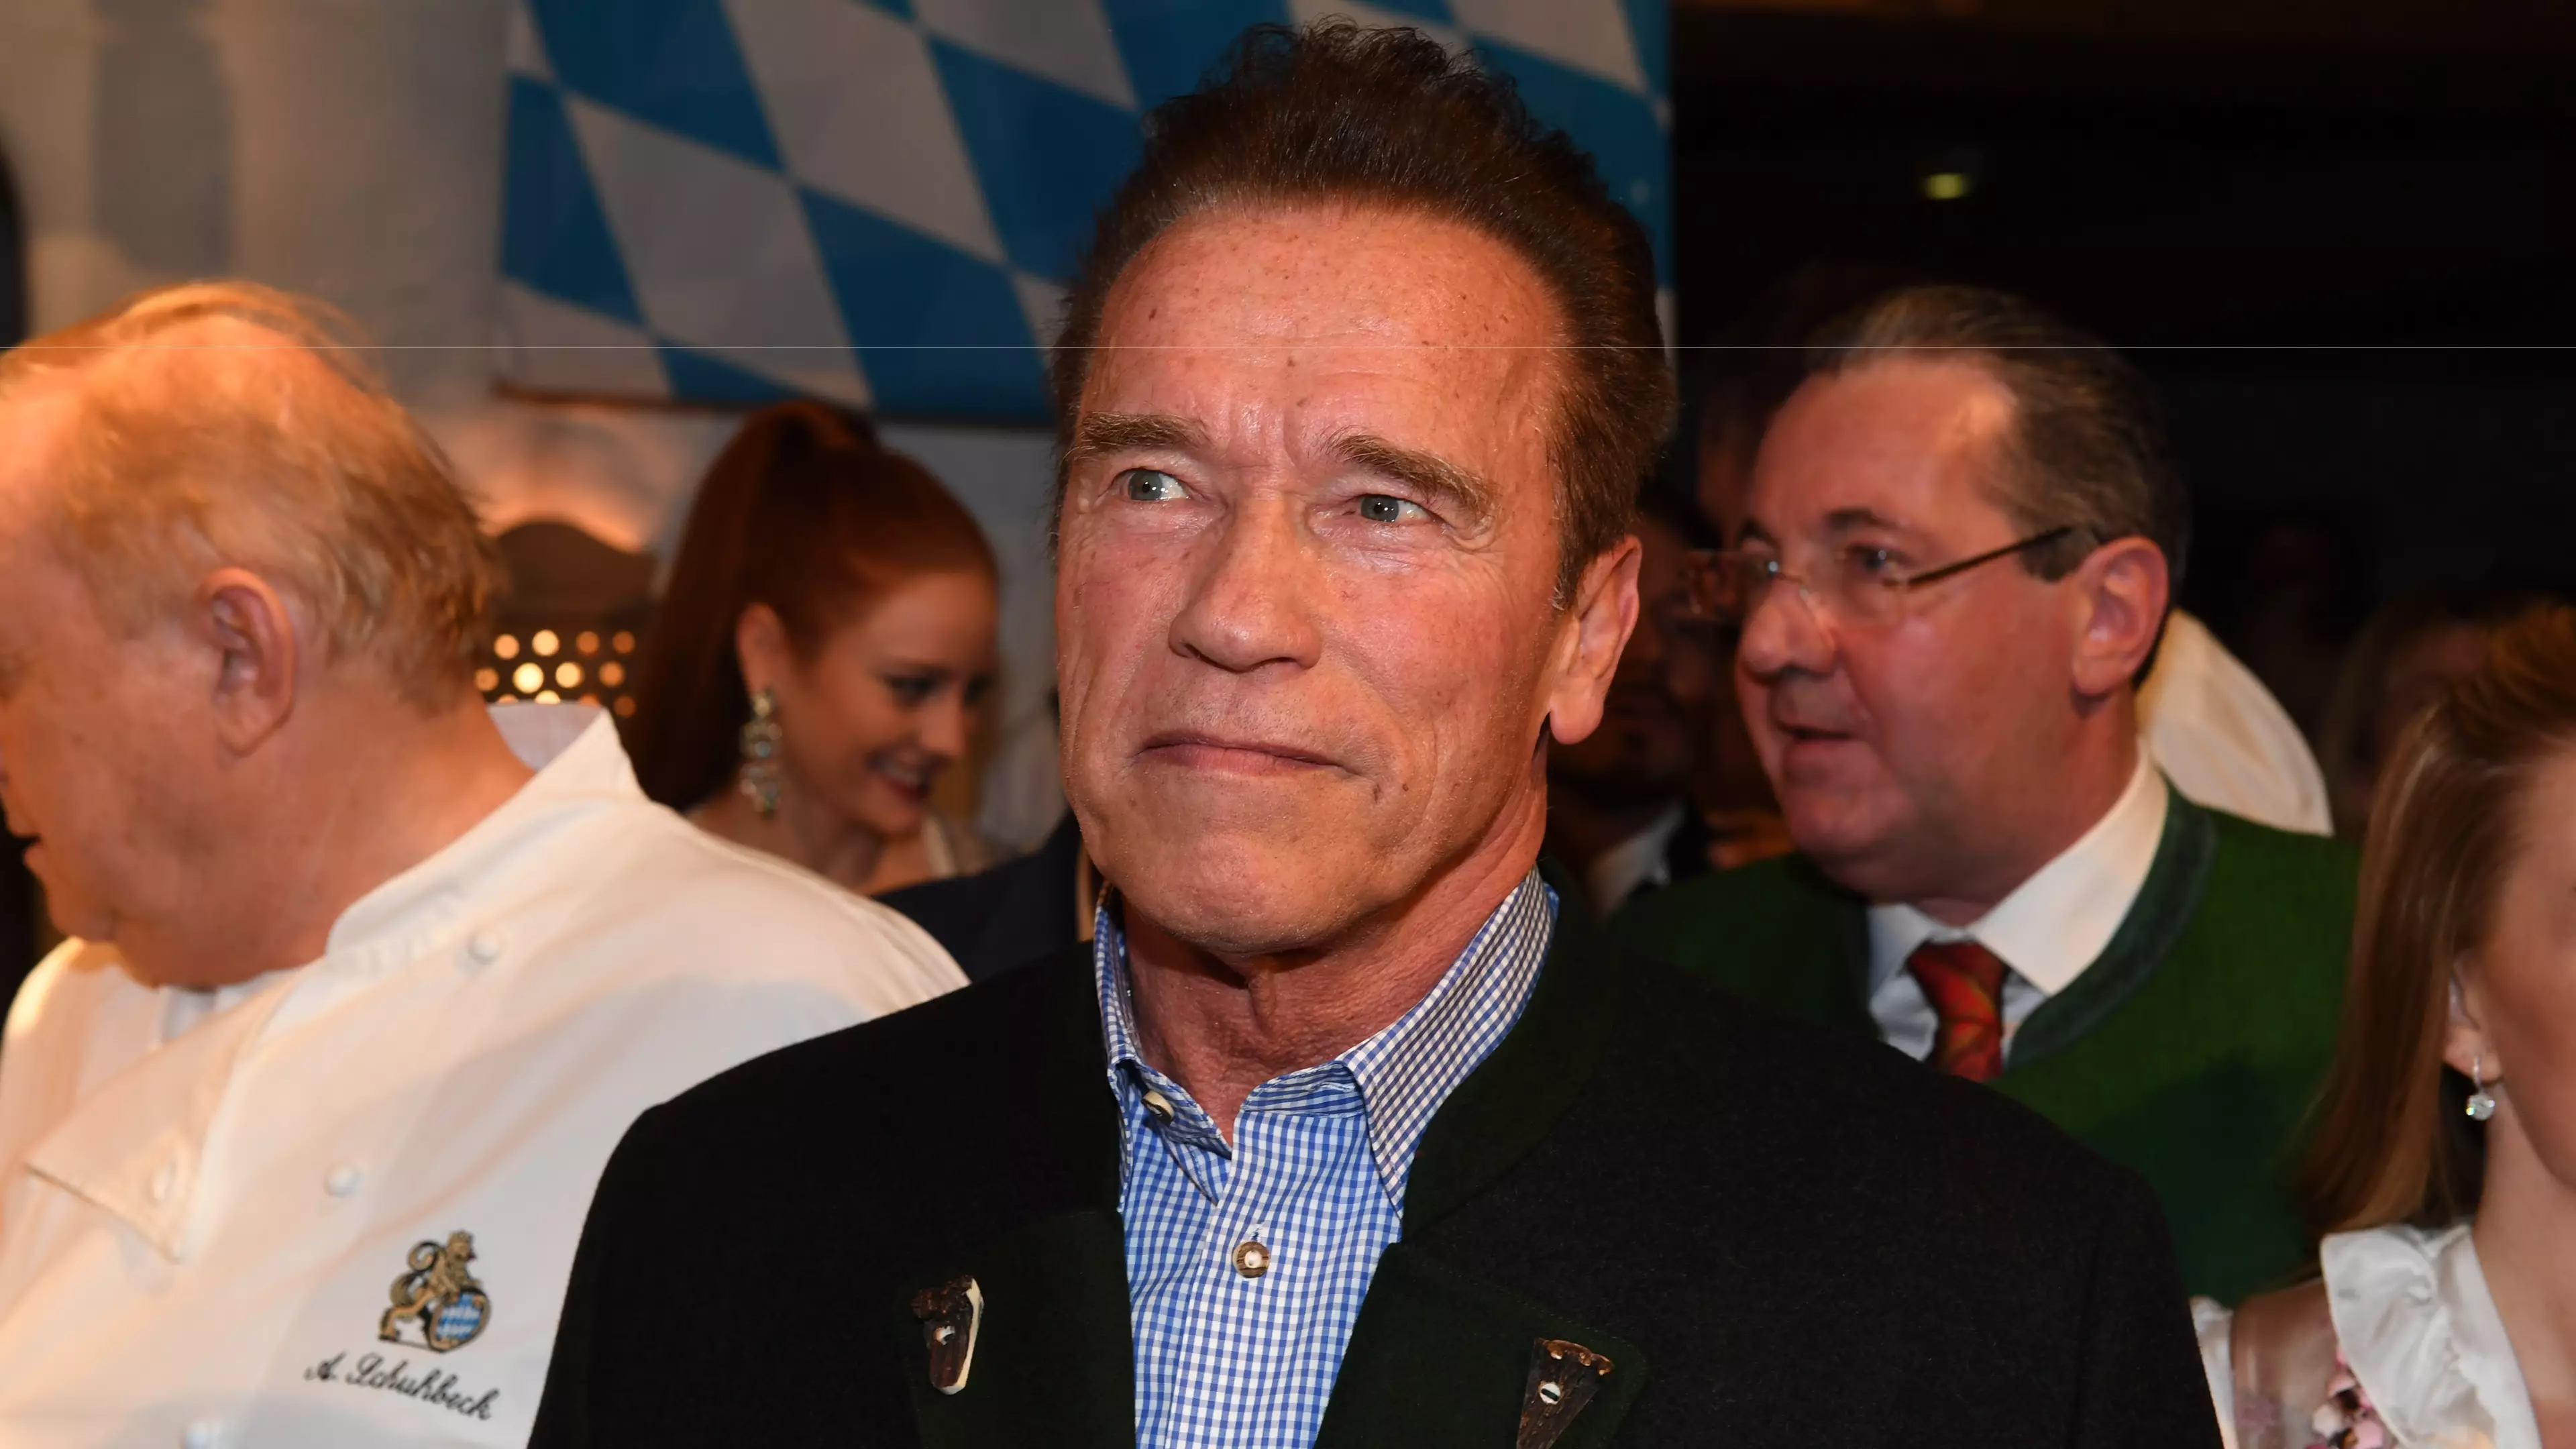 Arnie Shuts Down Troll Who Said 'Special Olympics Shouldn't Exist'